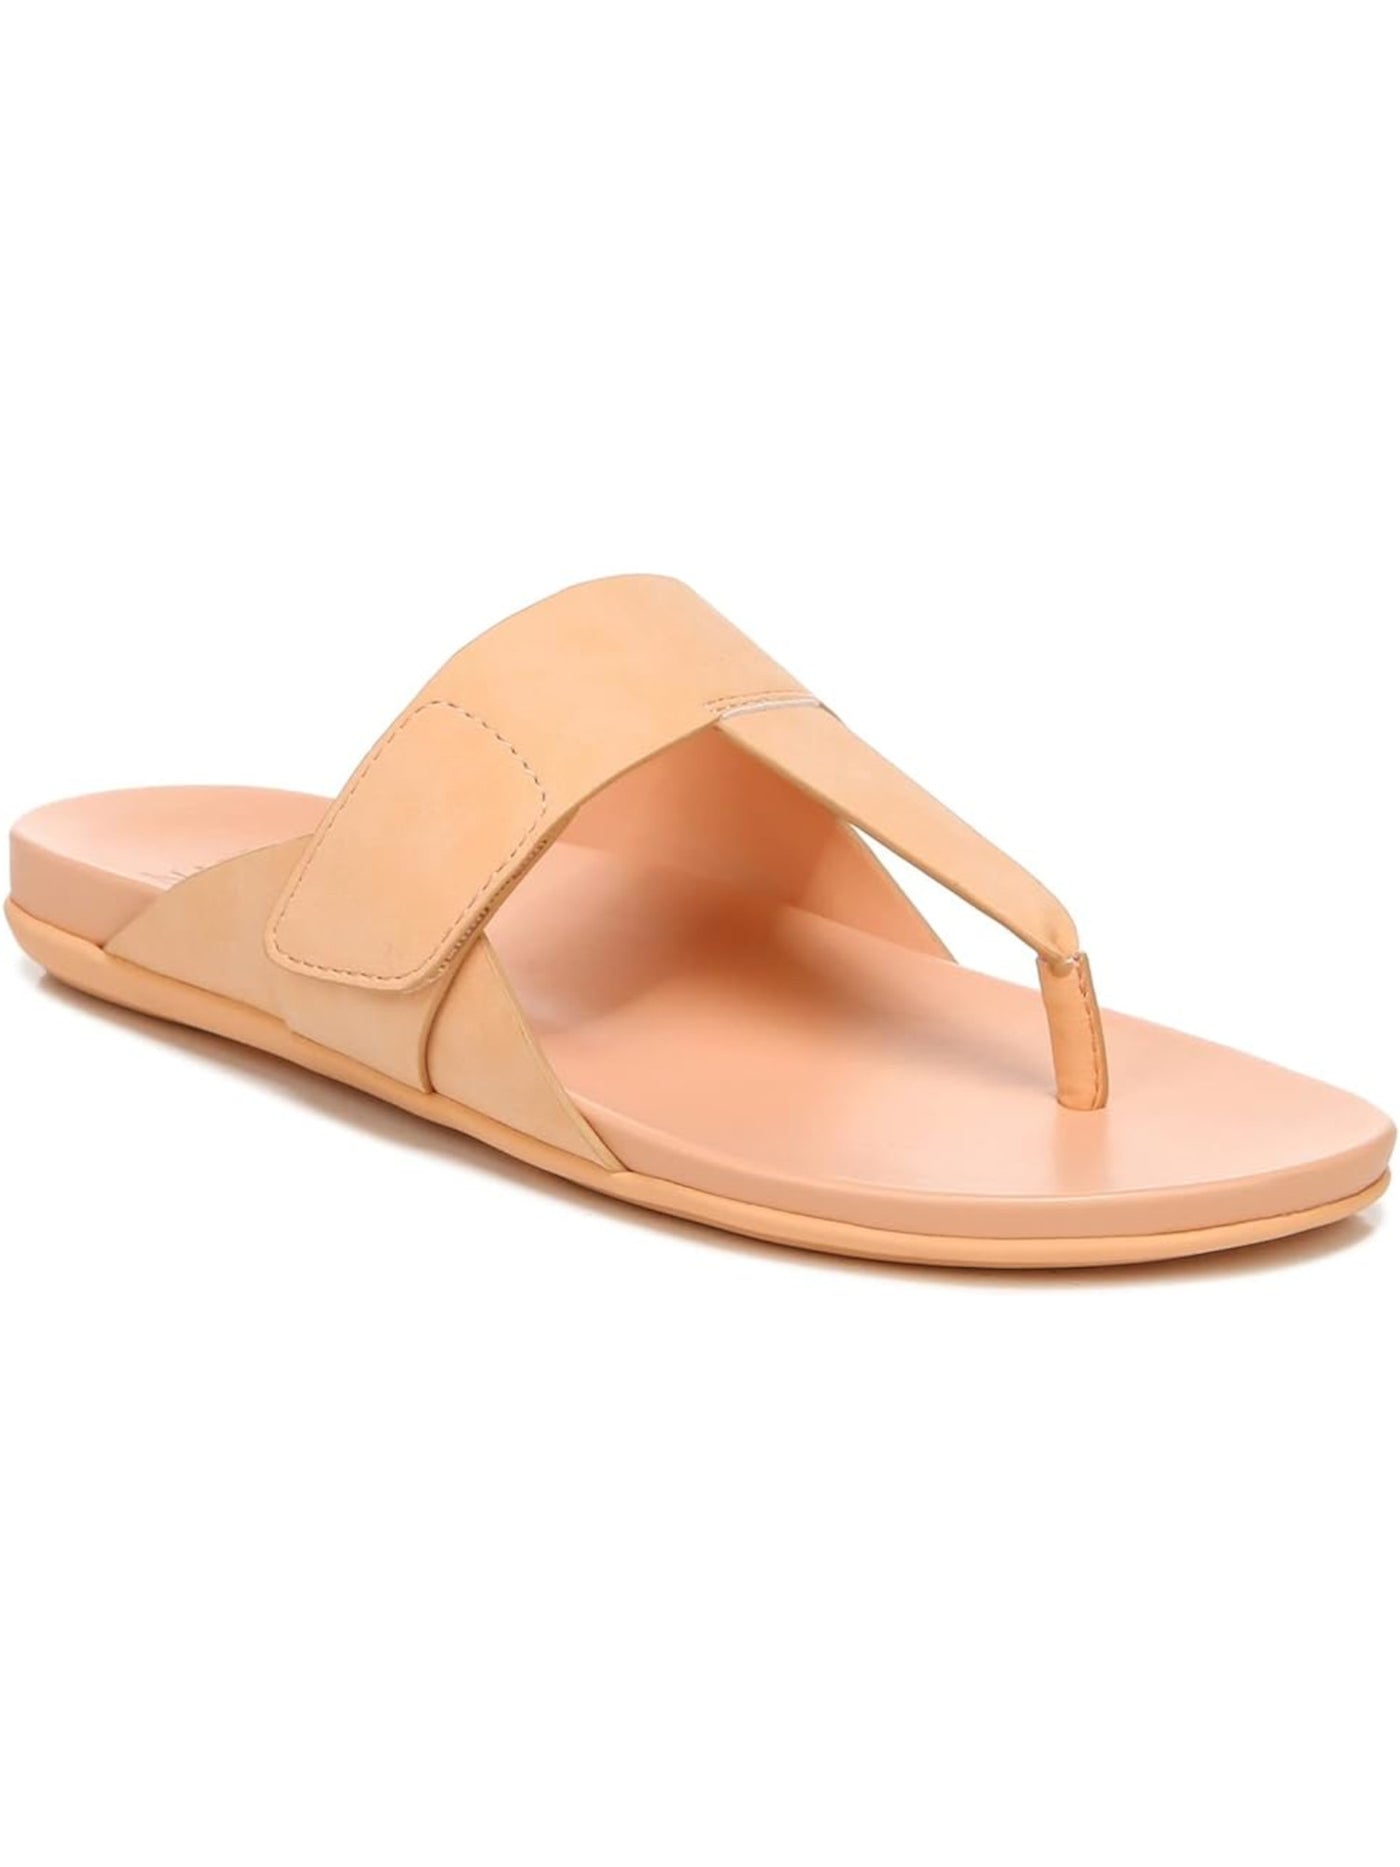 NATURALIZER Womens Orange Genn-twirl Round Toe Slip On Thong Sandals Shoes 7.5 M